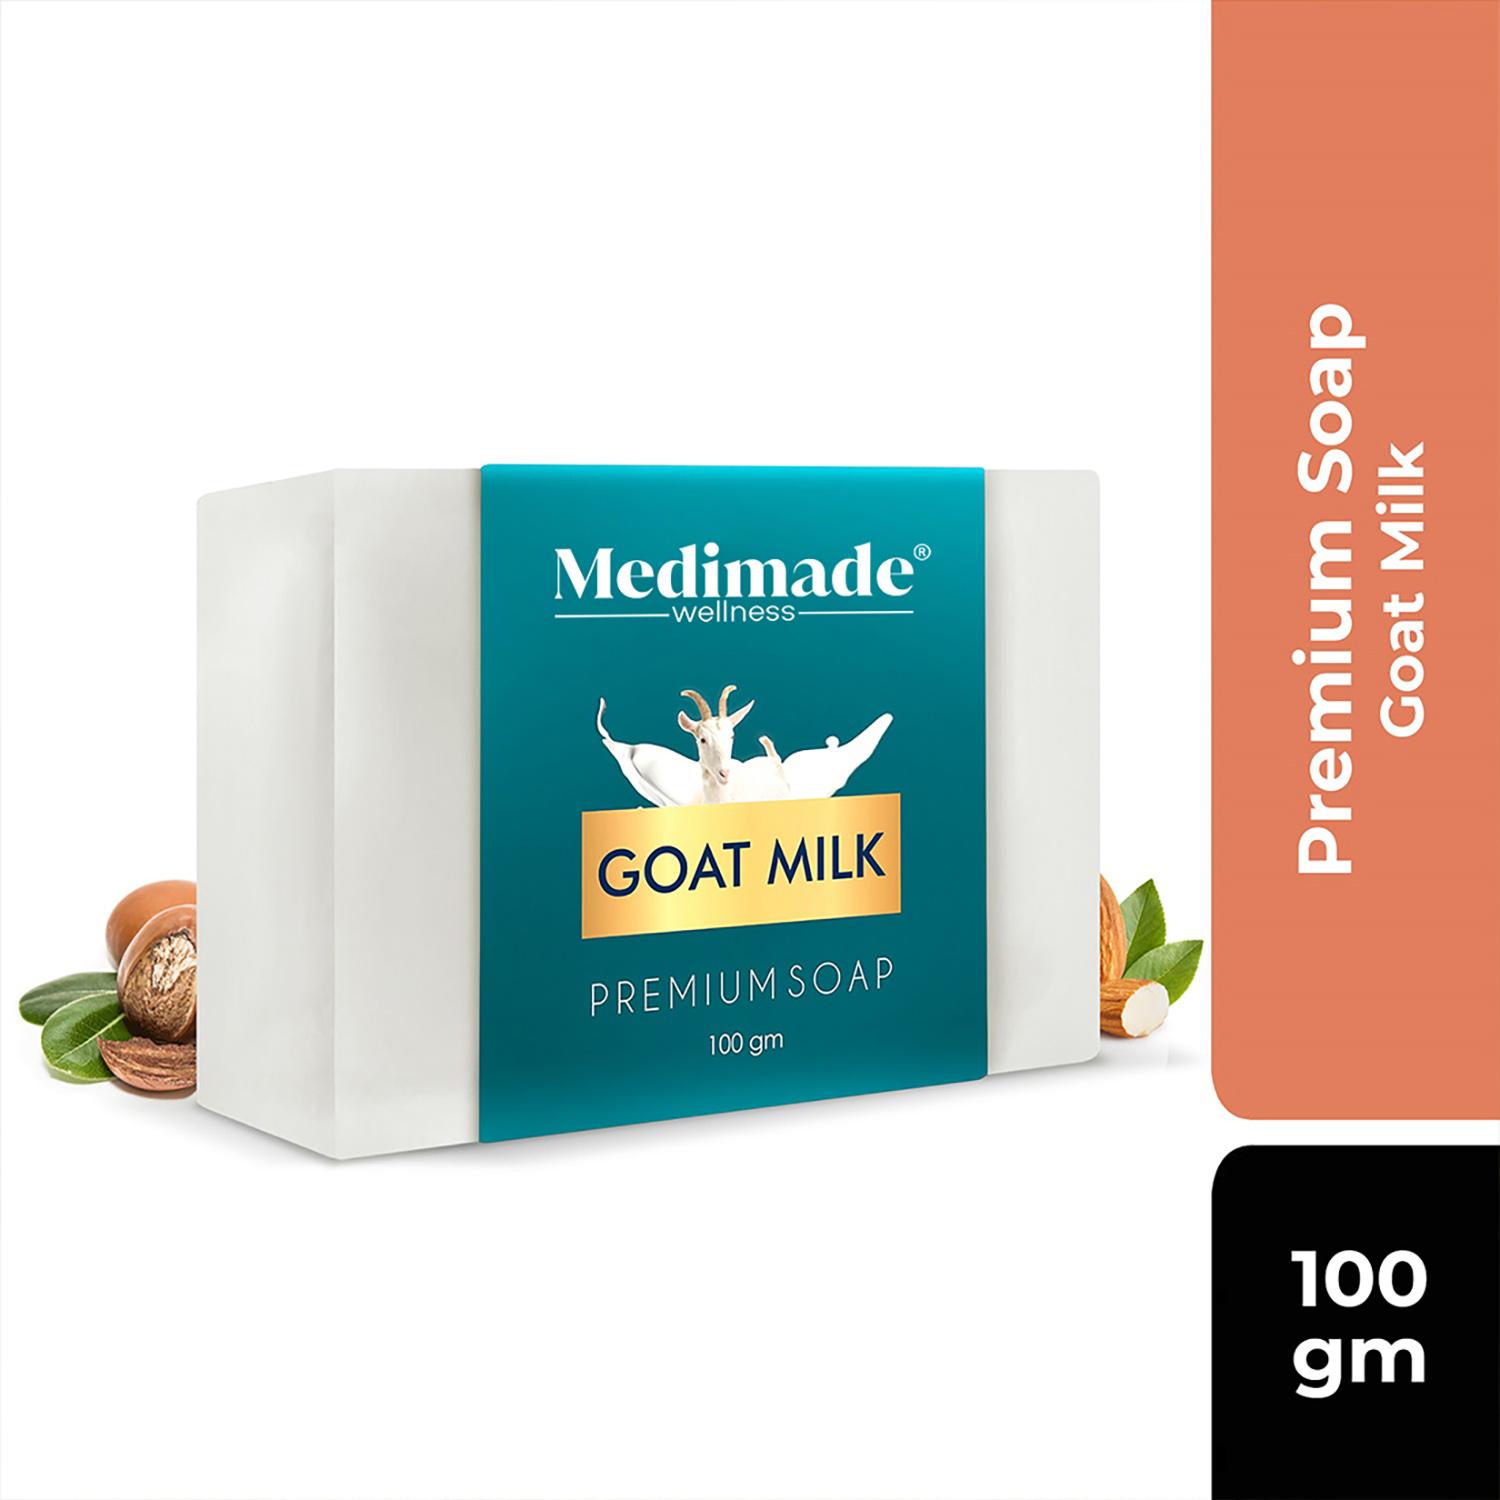 Medimade | Medimade Goat Milk Premium Soap (100g)